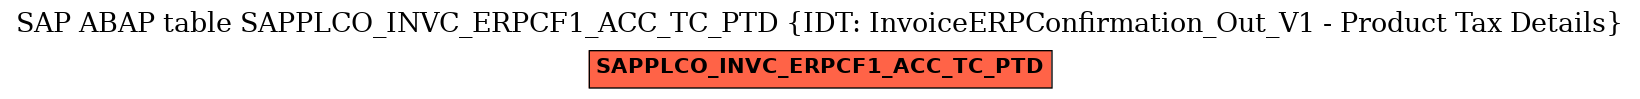 E-R Diagram for table SAPPLCO_INVC_ERPCF1_ACC_TC_PTD (IDT: InvoiceERPConfirmation_Out_V1 - Product Tax Details)